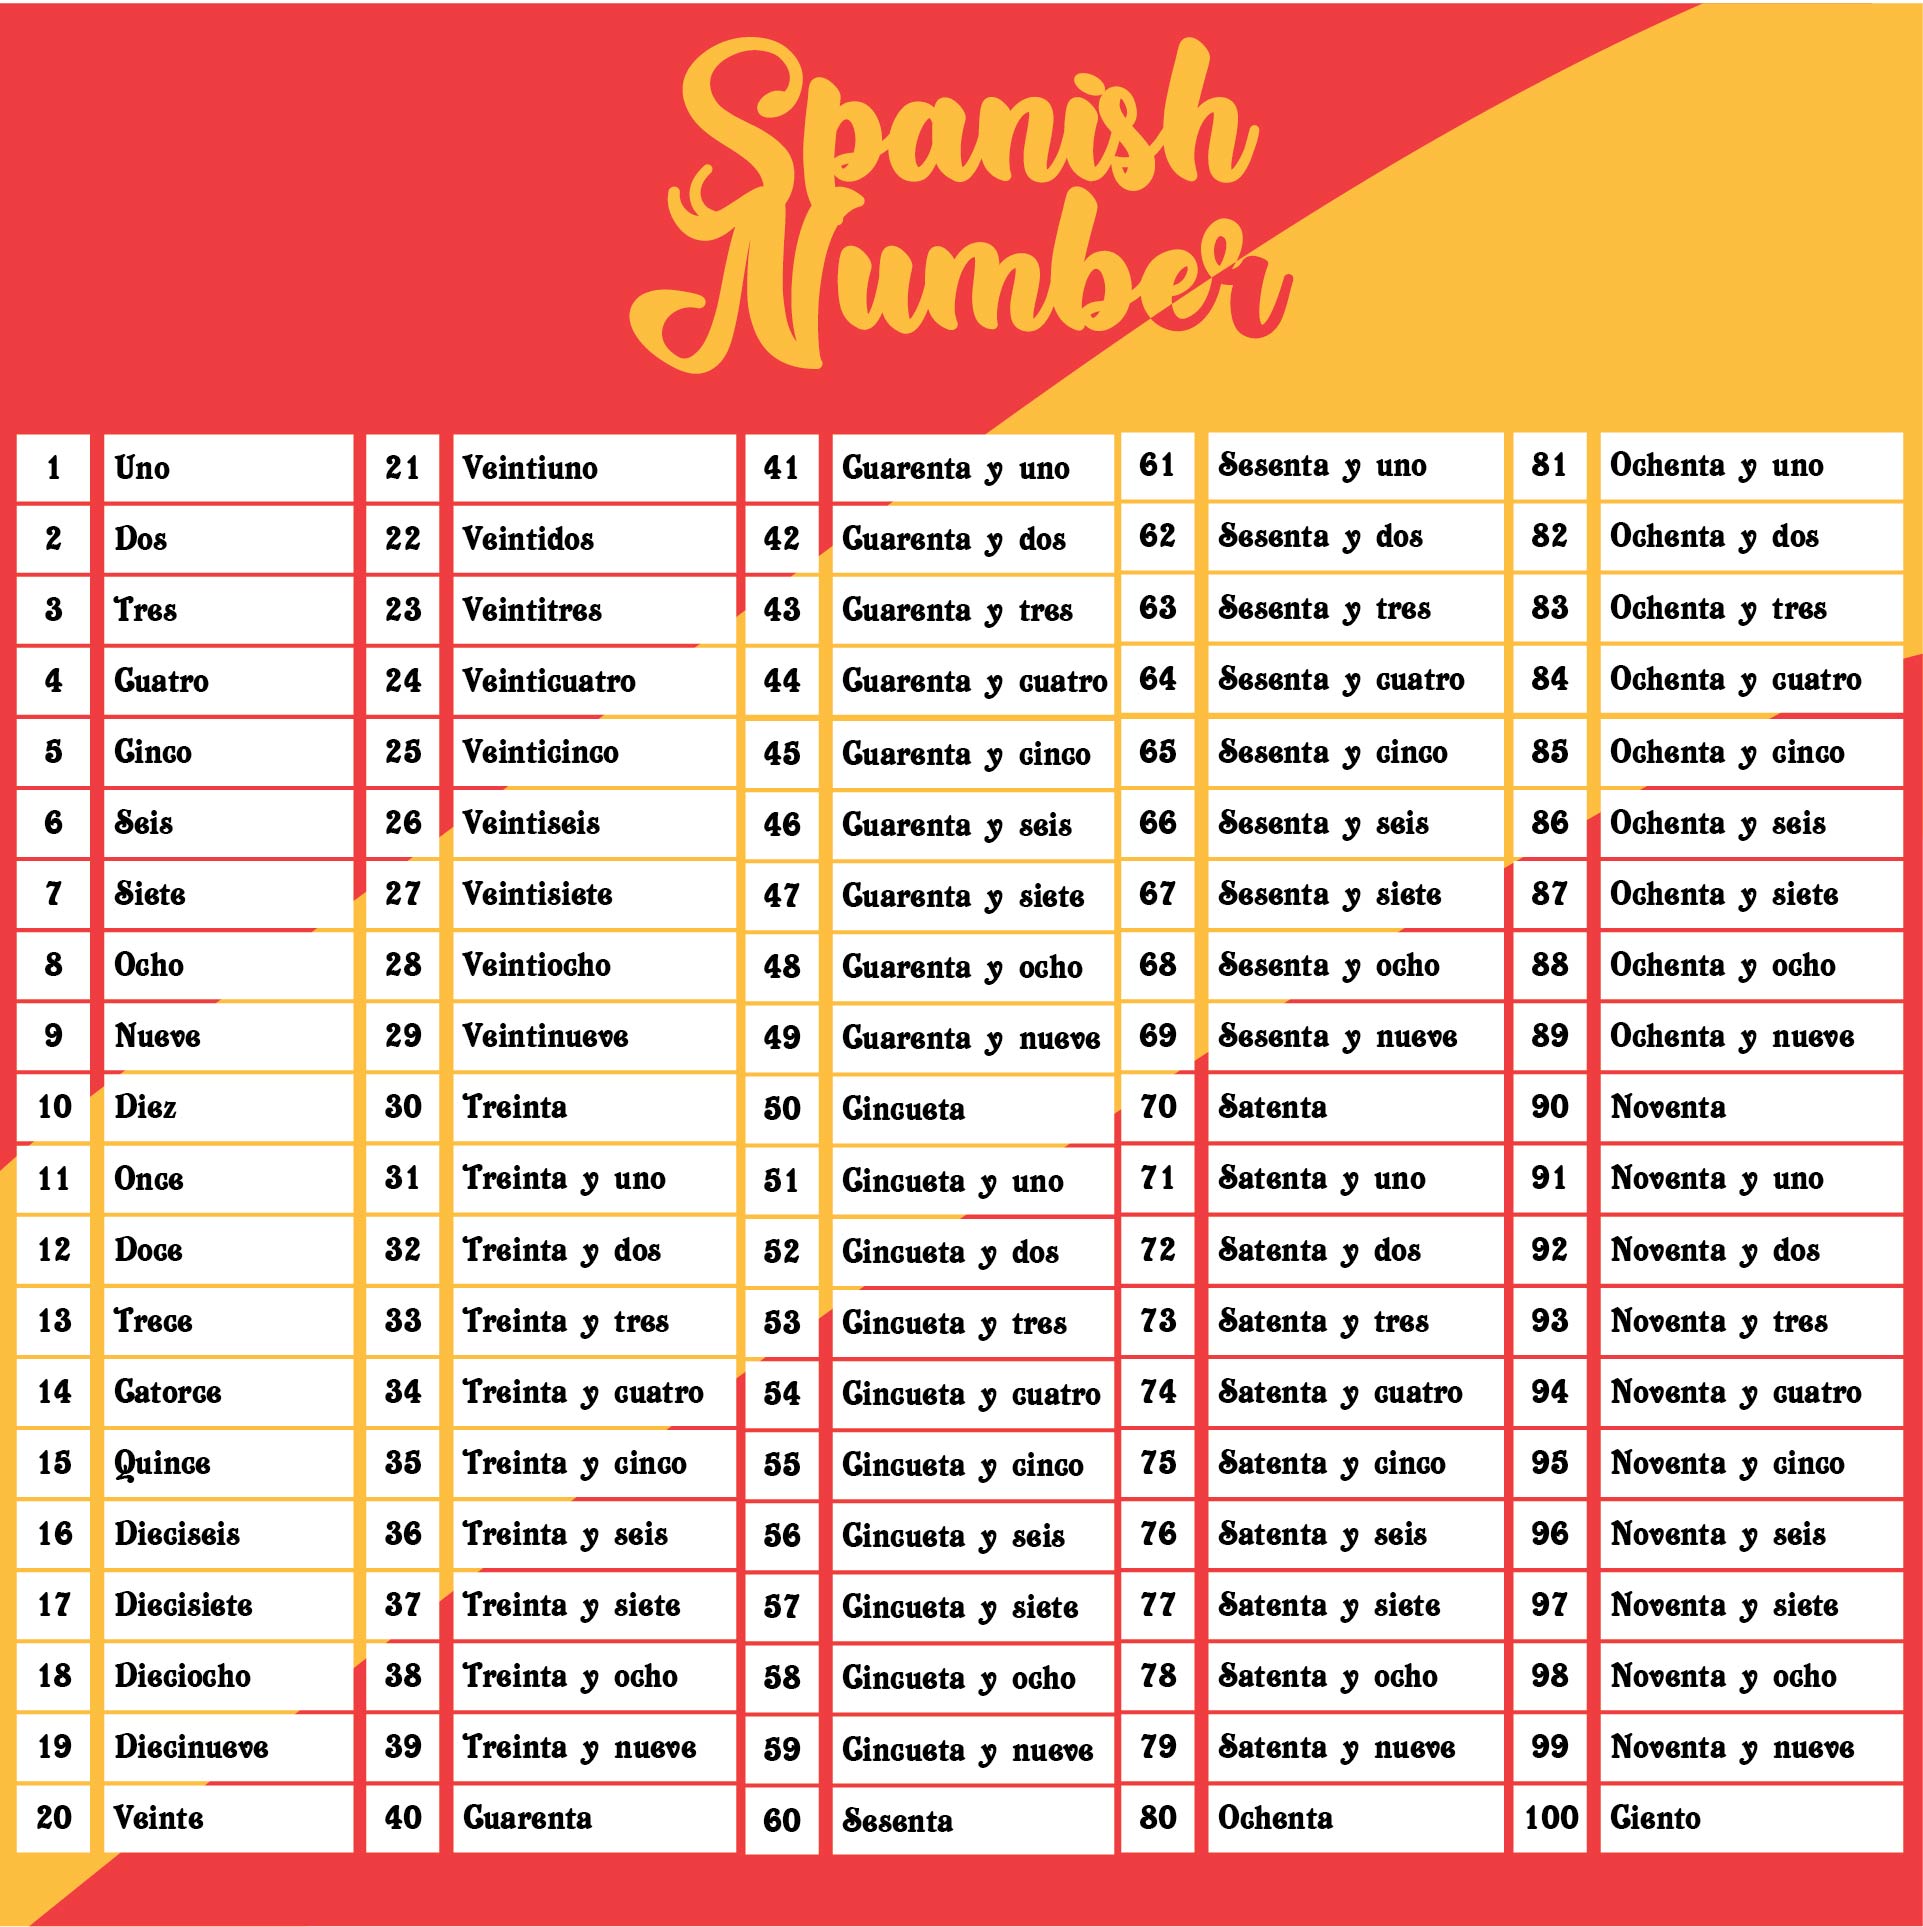 Free Printable Spanish Numbers 1 100